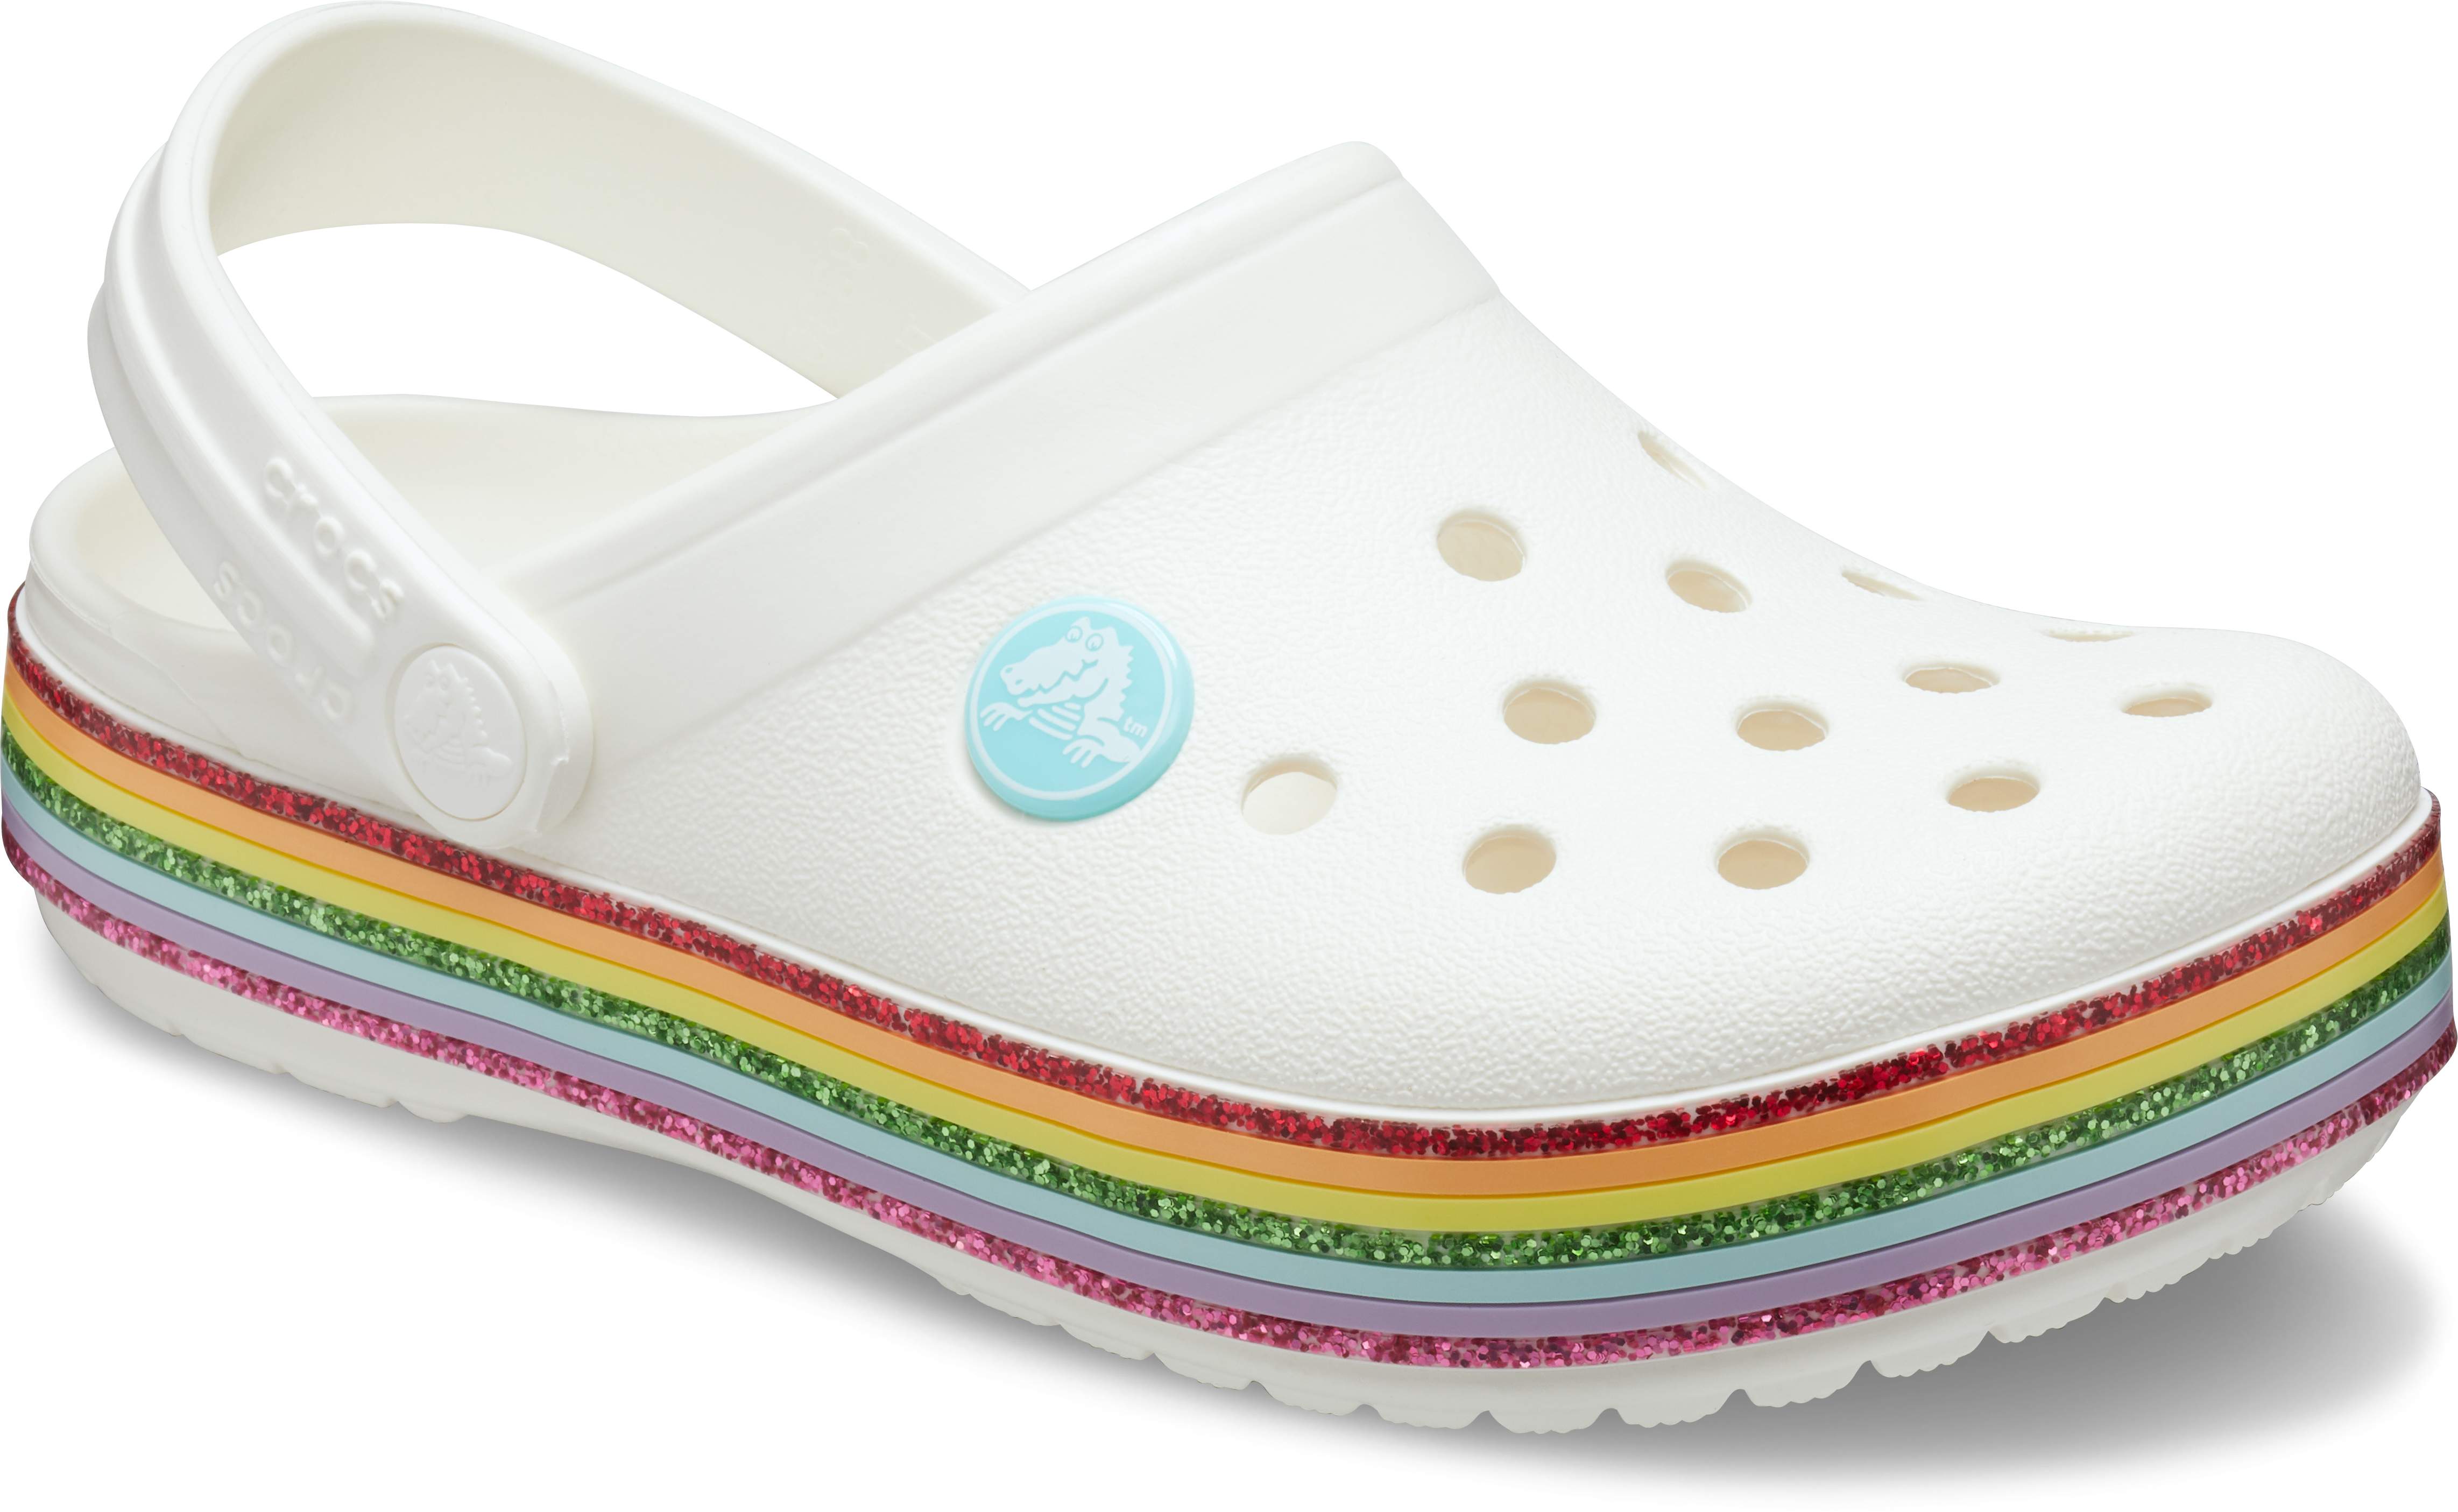 rainbow crocs for kids